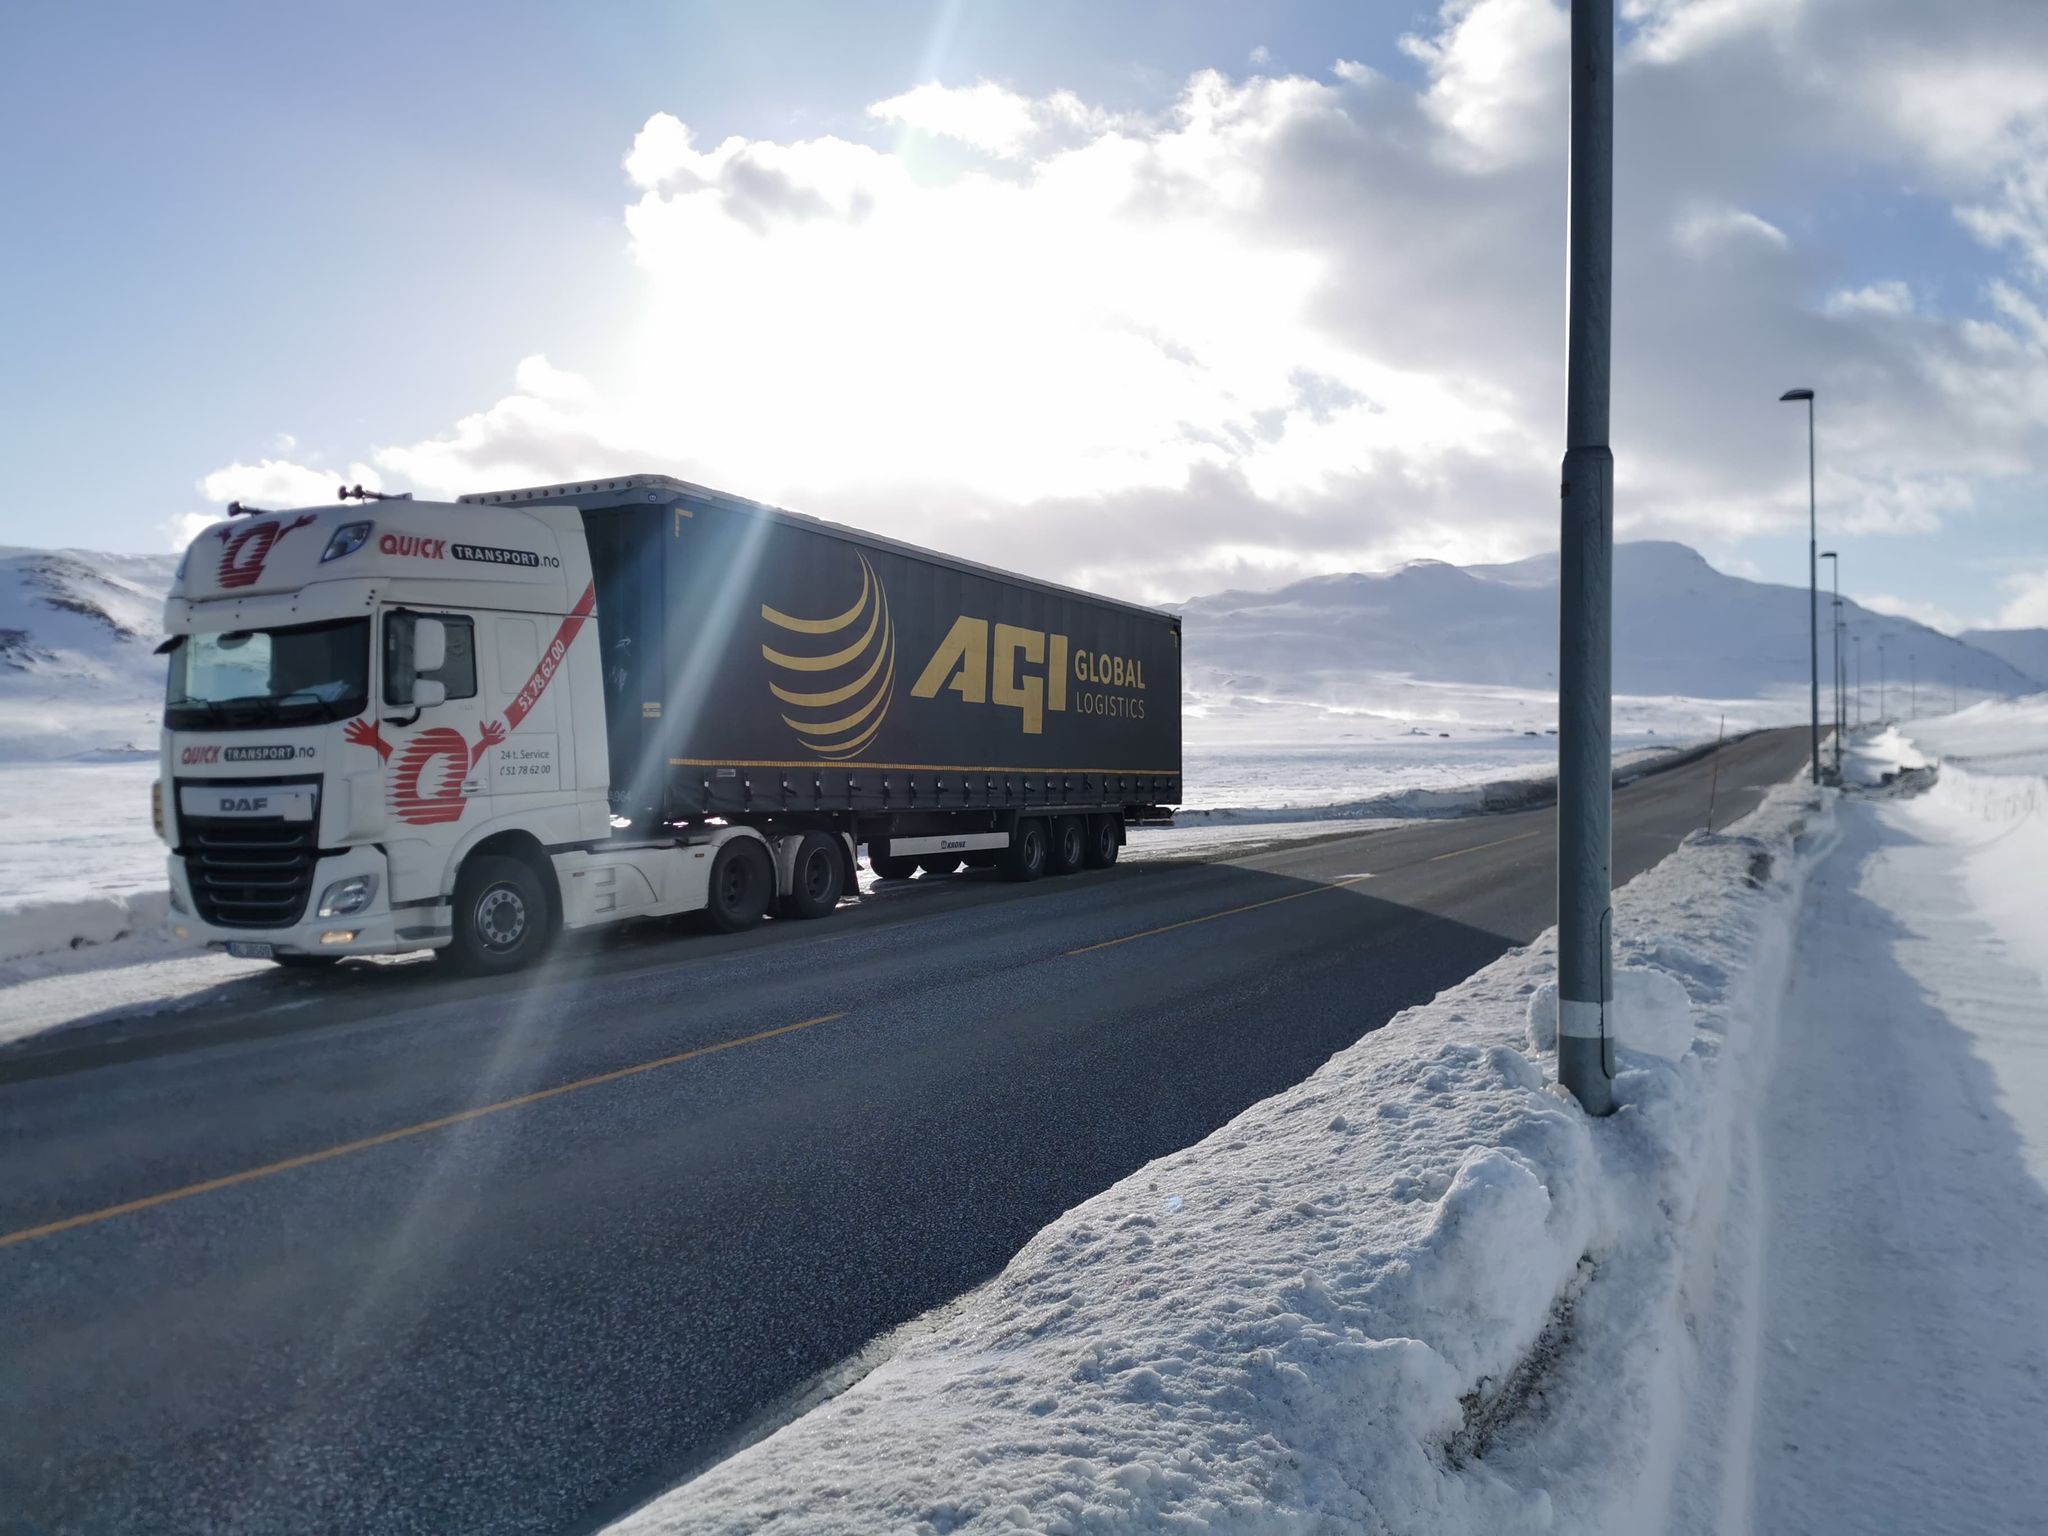 Road freight AGI Global Norway